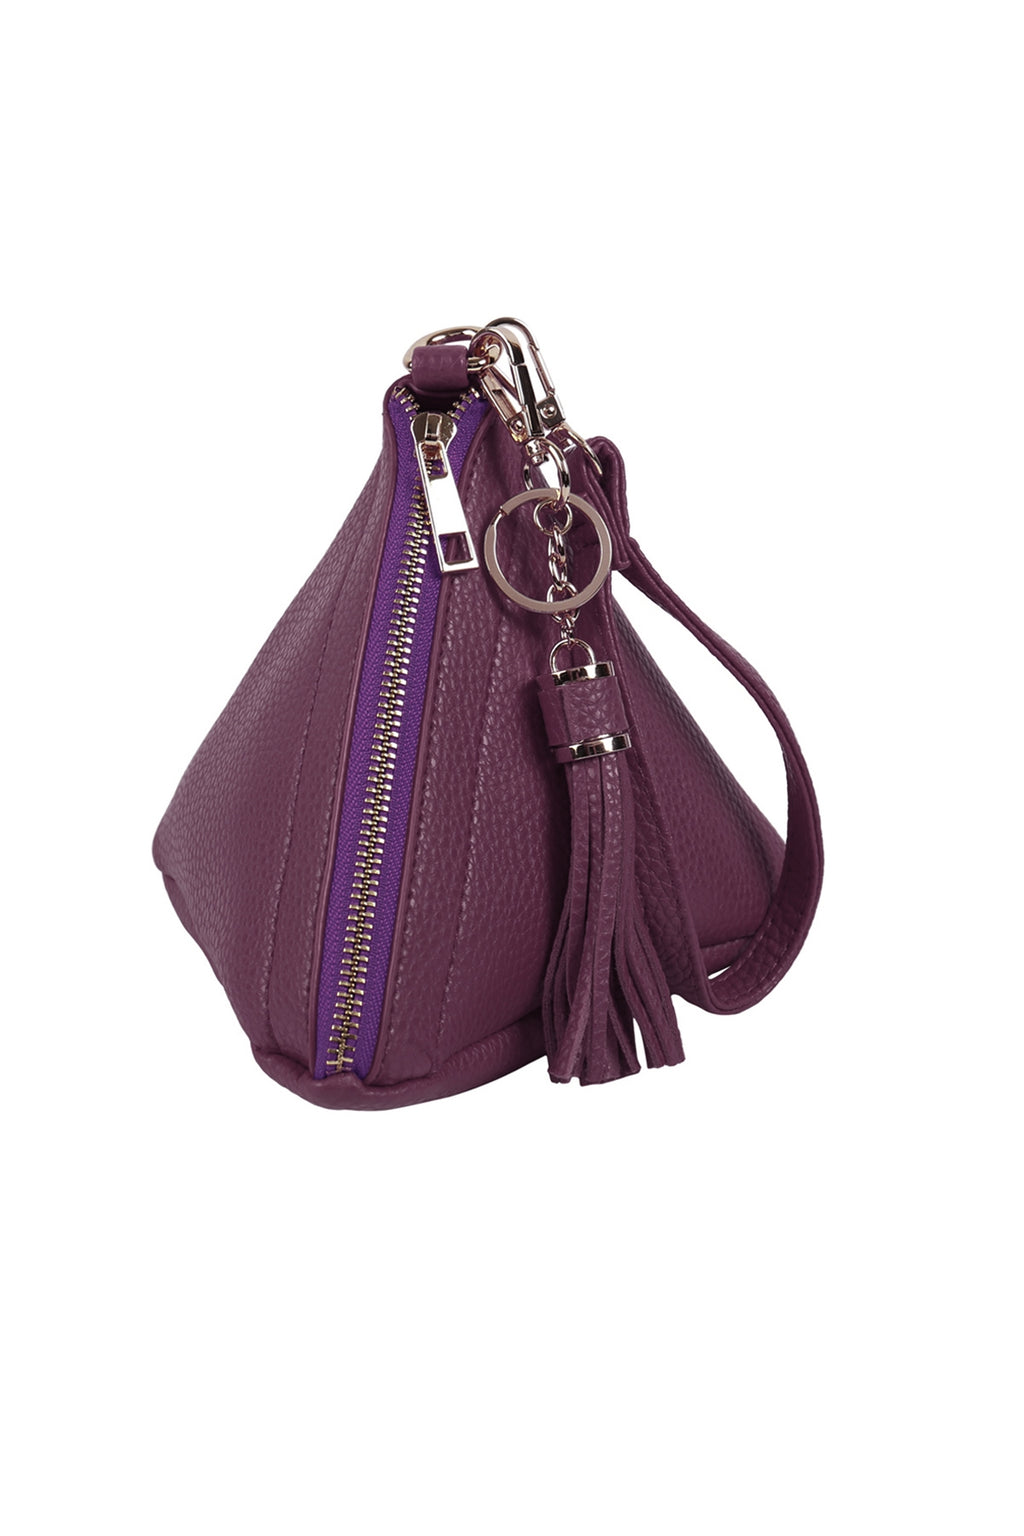 Pyramid Shape Leather Wristlet Bag Dark Purple - Pack of 6